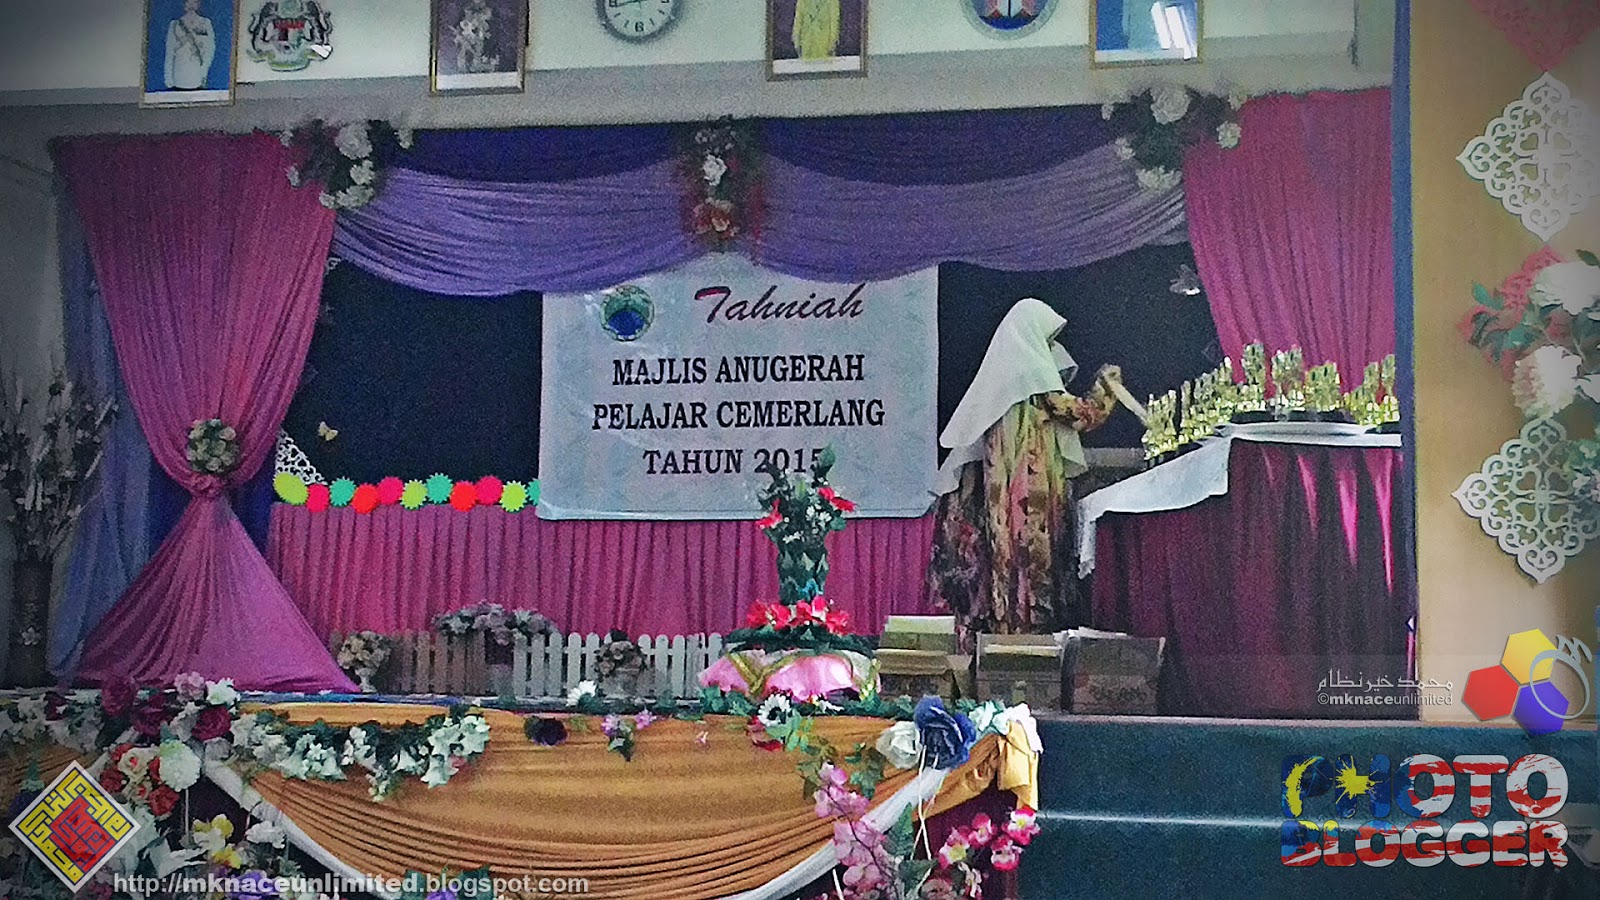 Majlis Anugerah Pelajar Cemerlang SA Nusa Perintis 2015 